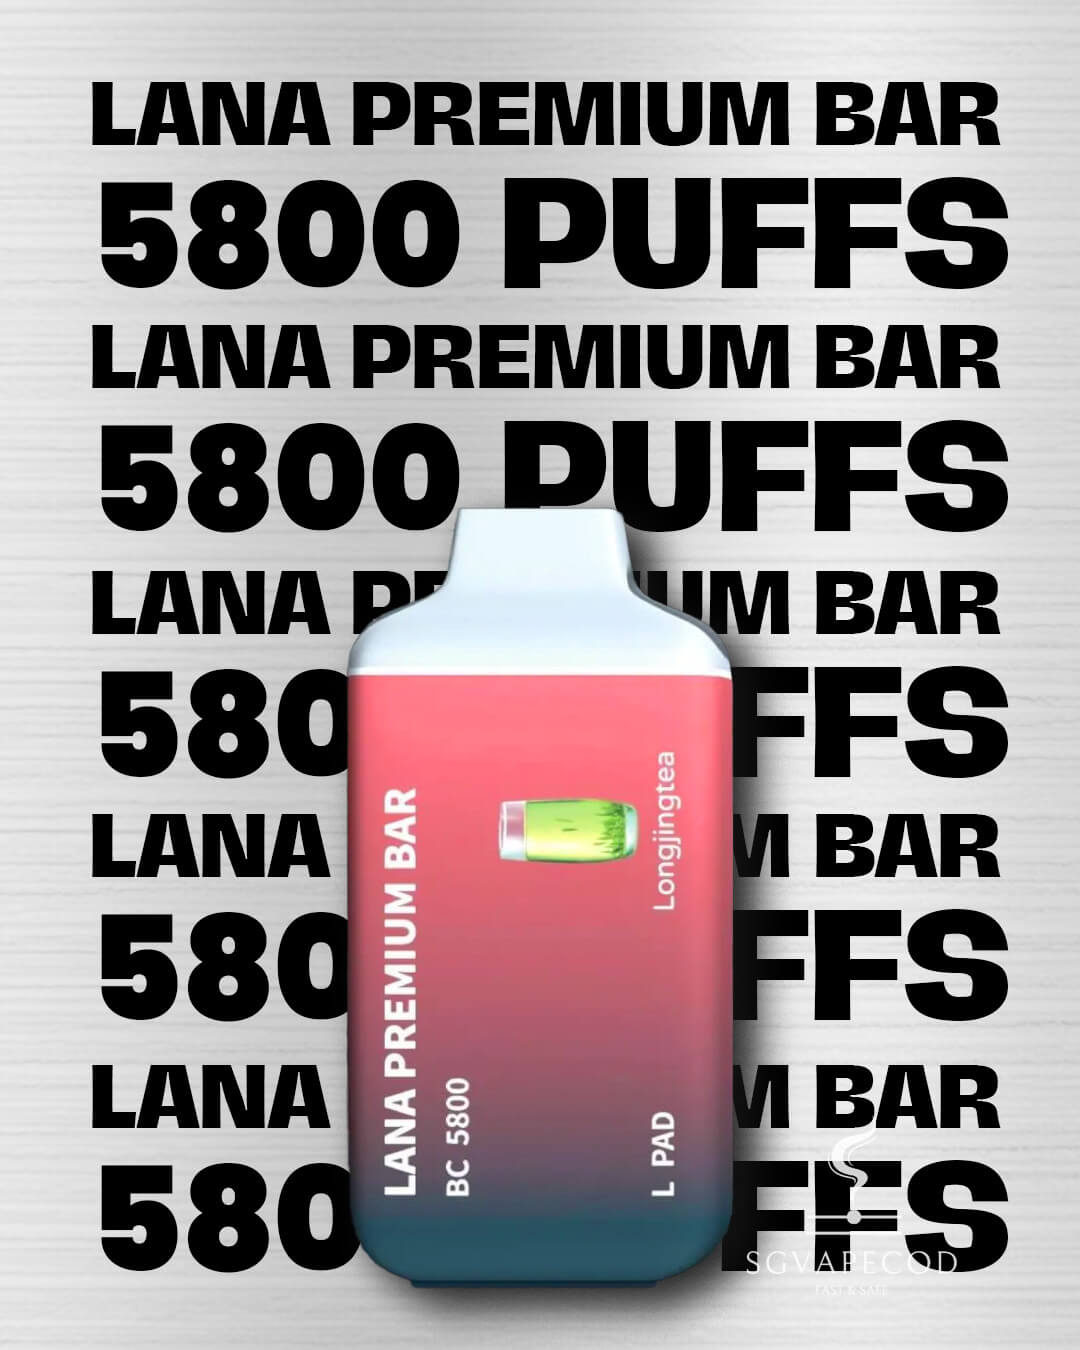 Lana Premium Bar 5800